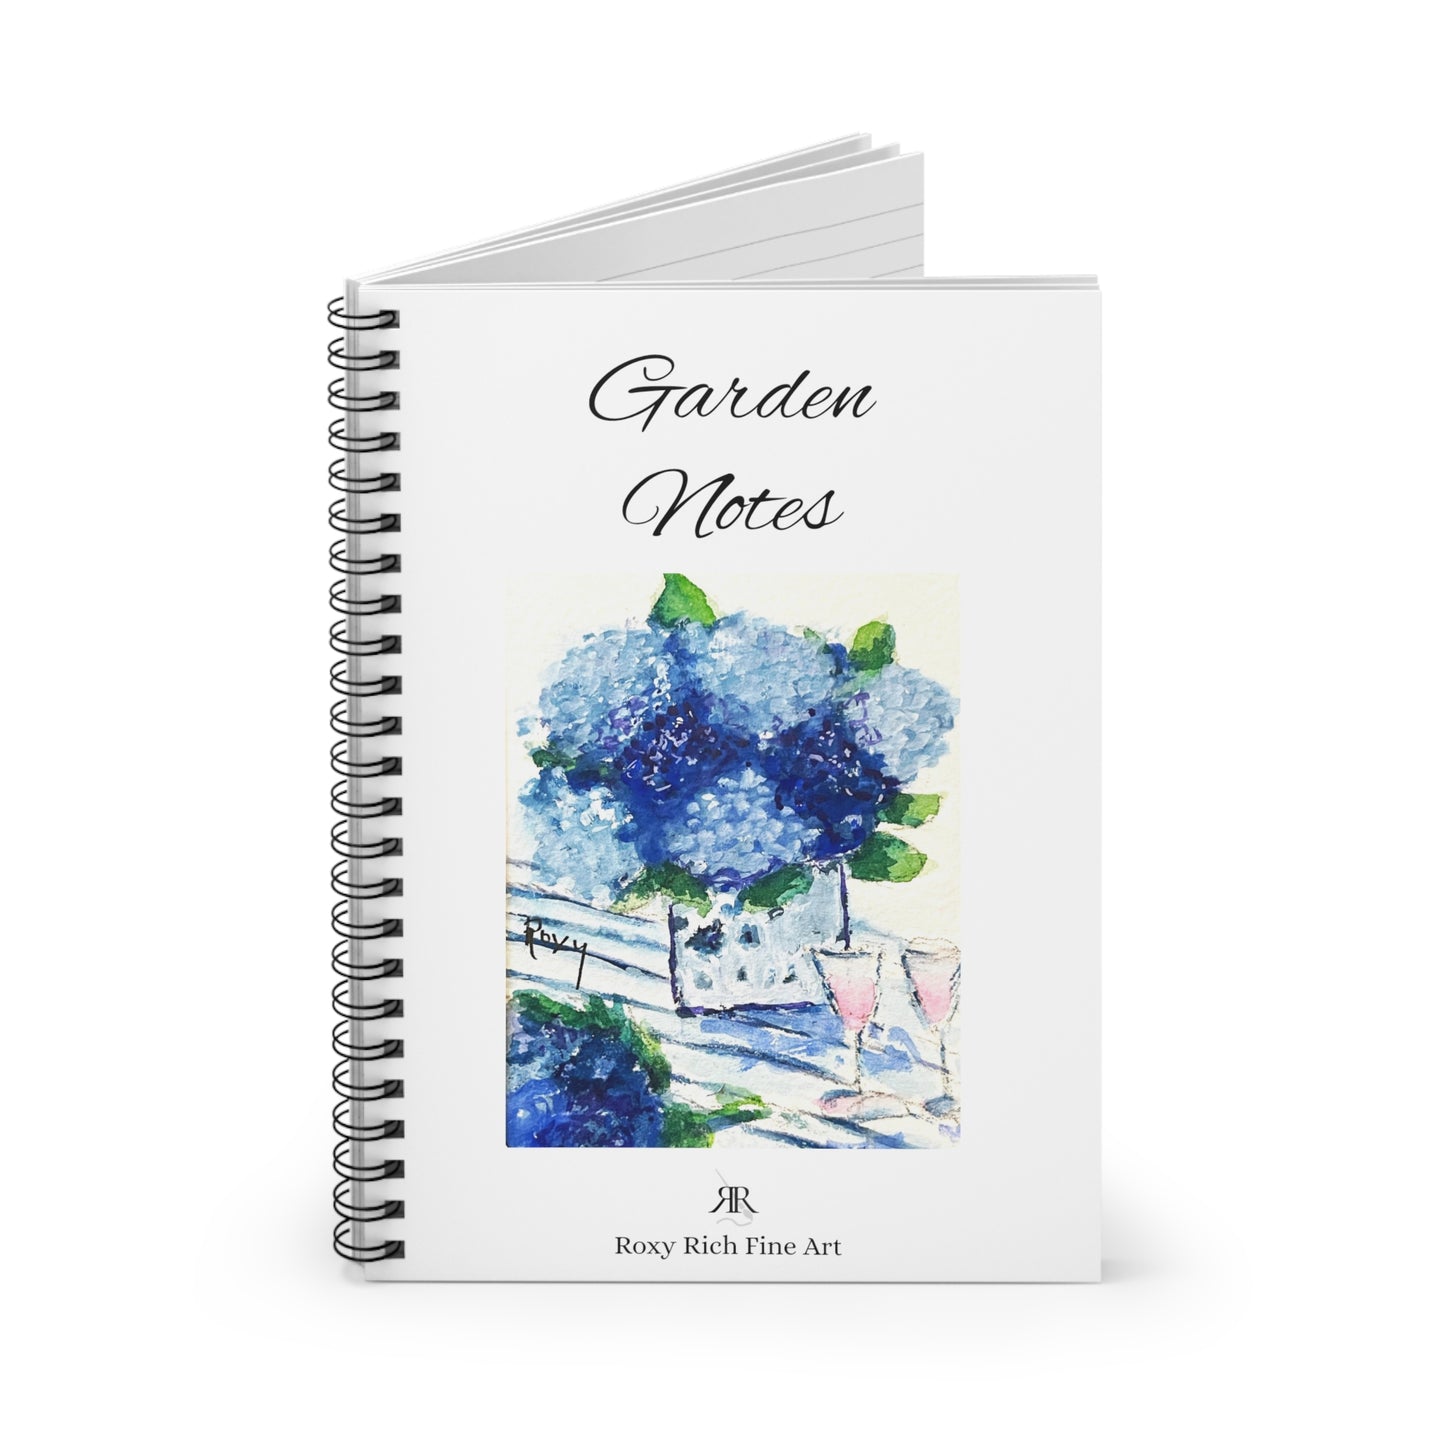 Garden Notes "Blue Hydrangeas on the Table" Spiral Notebook